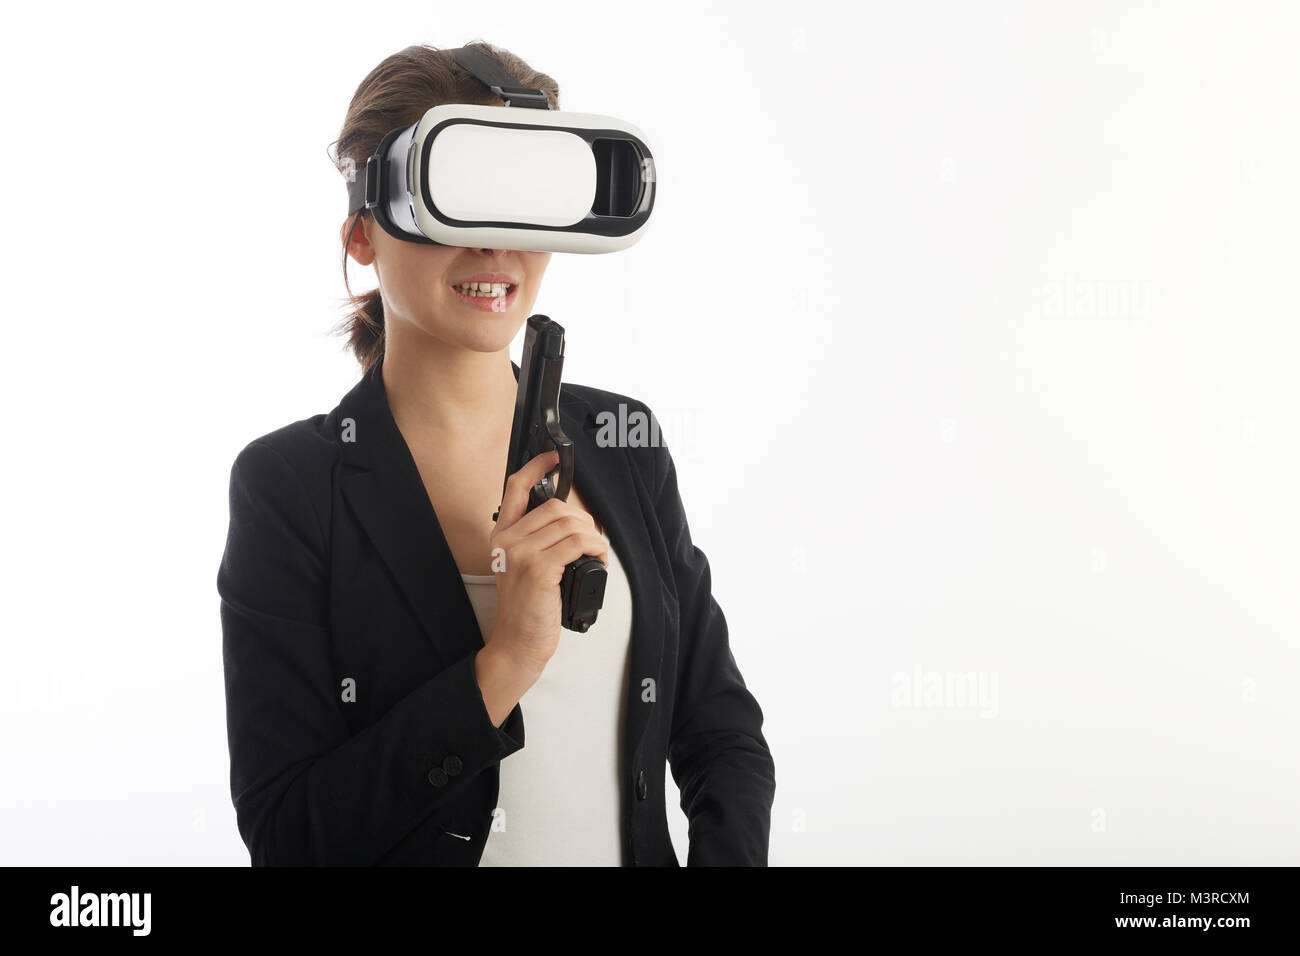 woman agent using virtual reality interface with gun Stock Photo